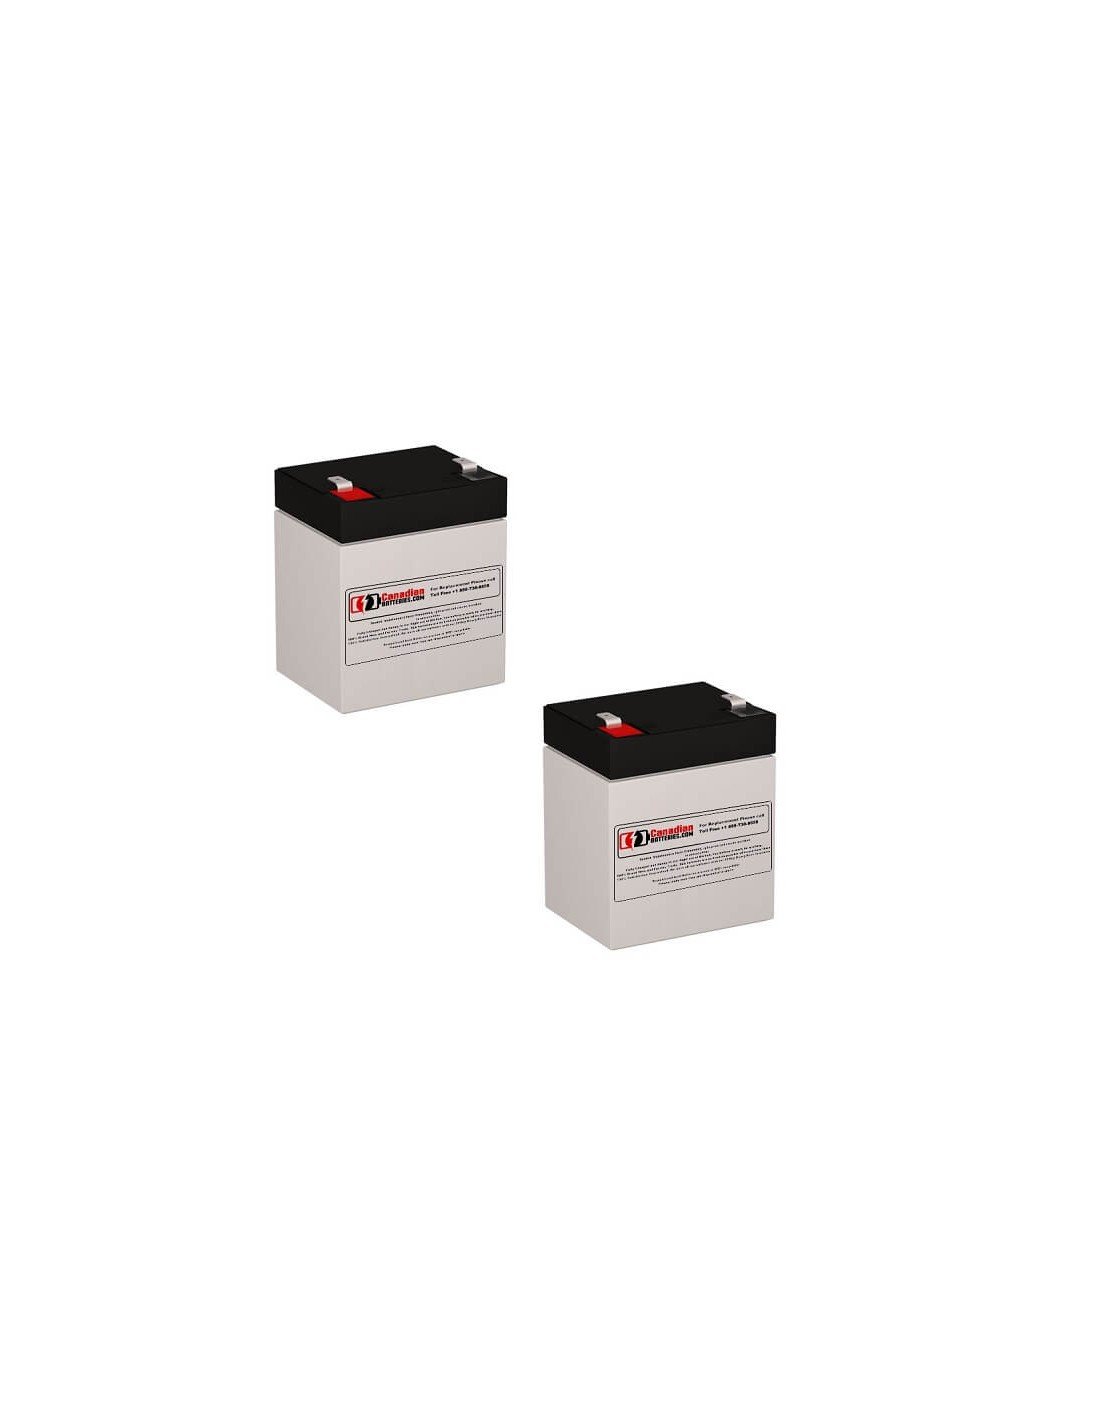 Batteries for Belkin F6c1250ei-tw-rk UPS, 2 x 12V, 5Ah - 60Wh